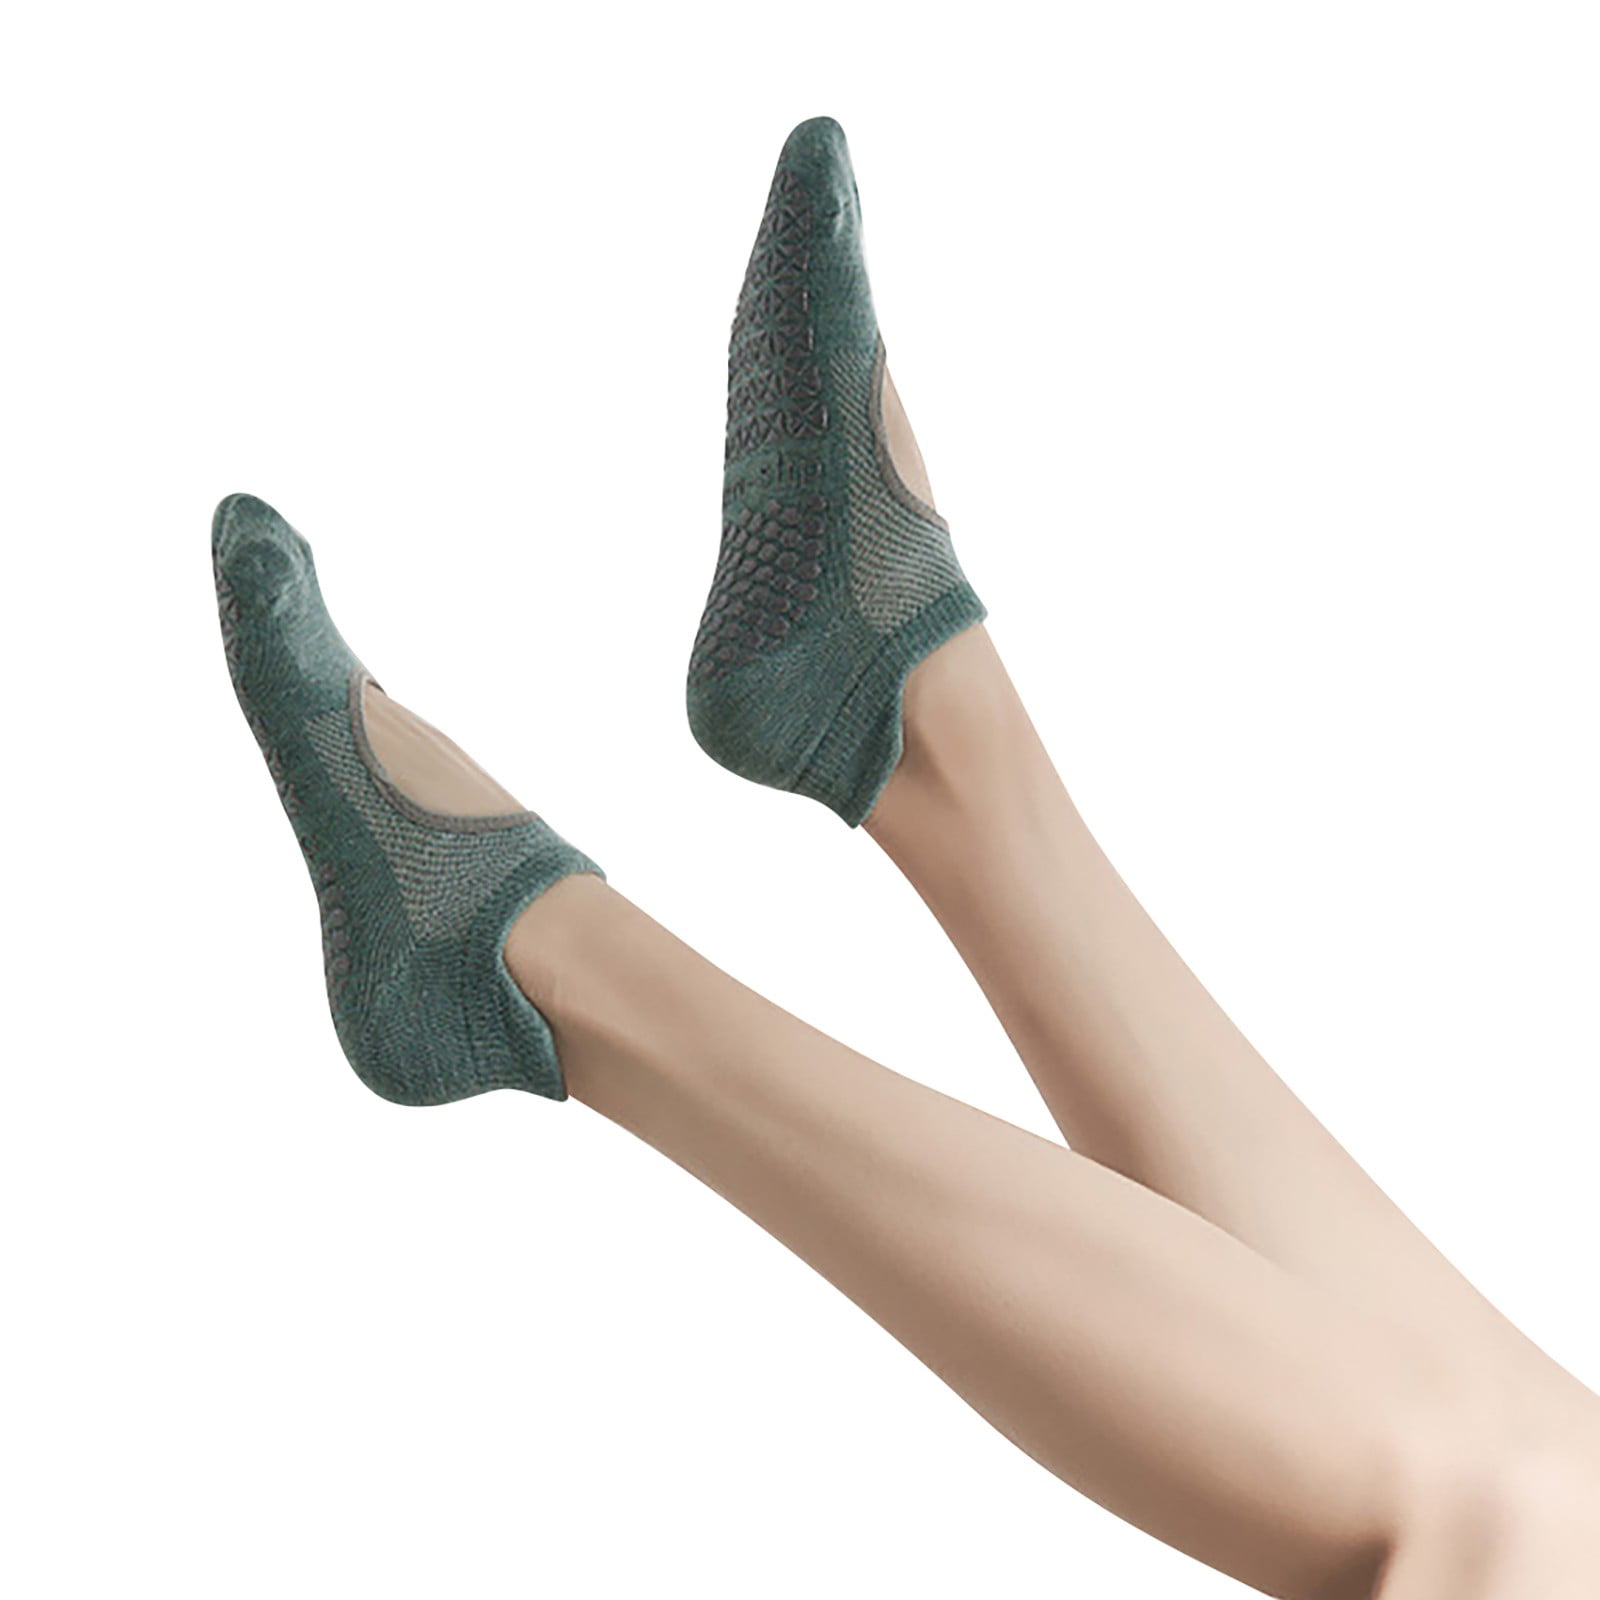 Ladies' Solid Color Backless Grip Socks Yoga Ankle Sports Socks